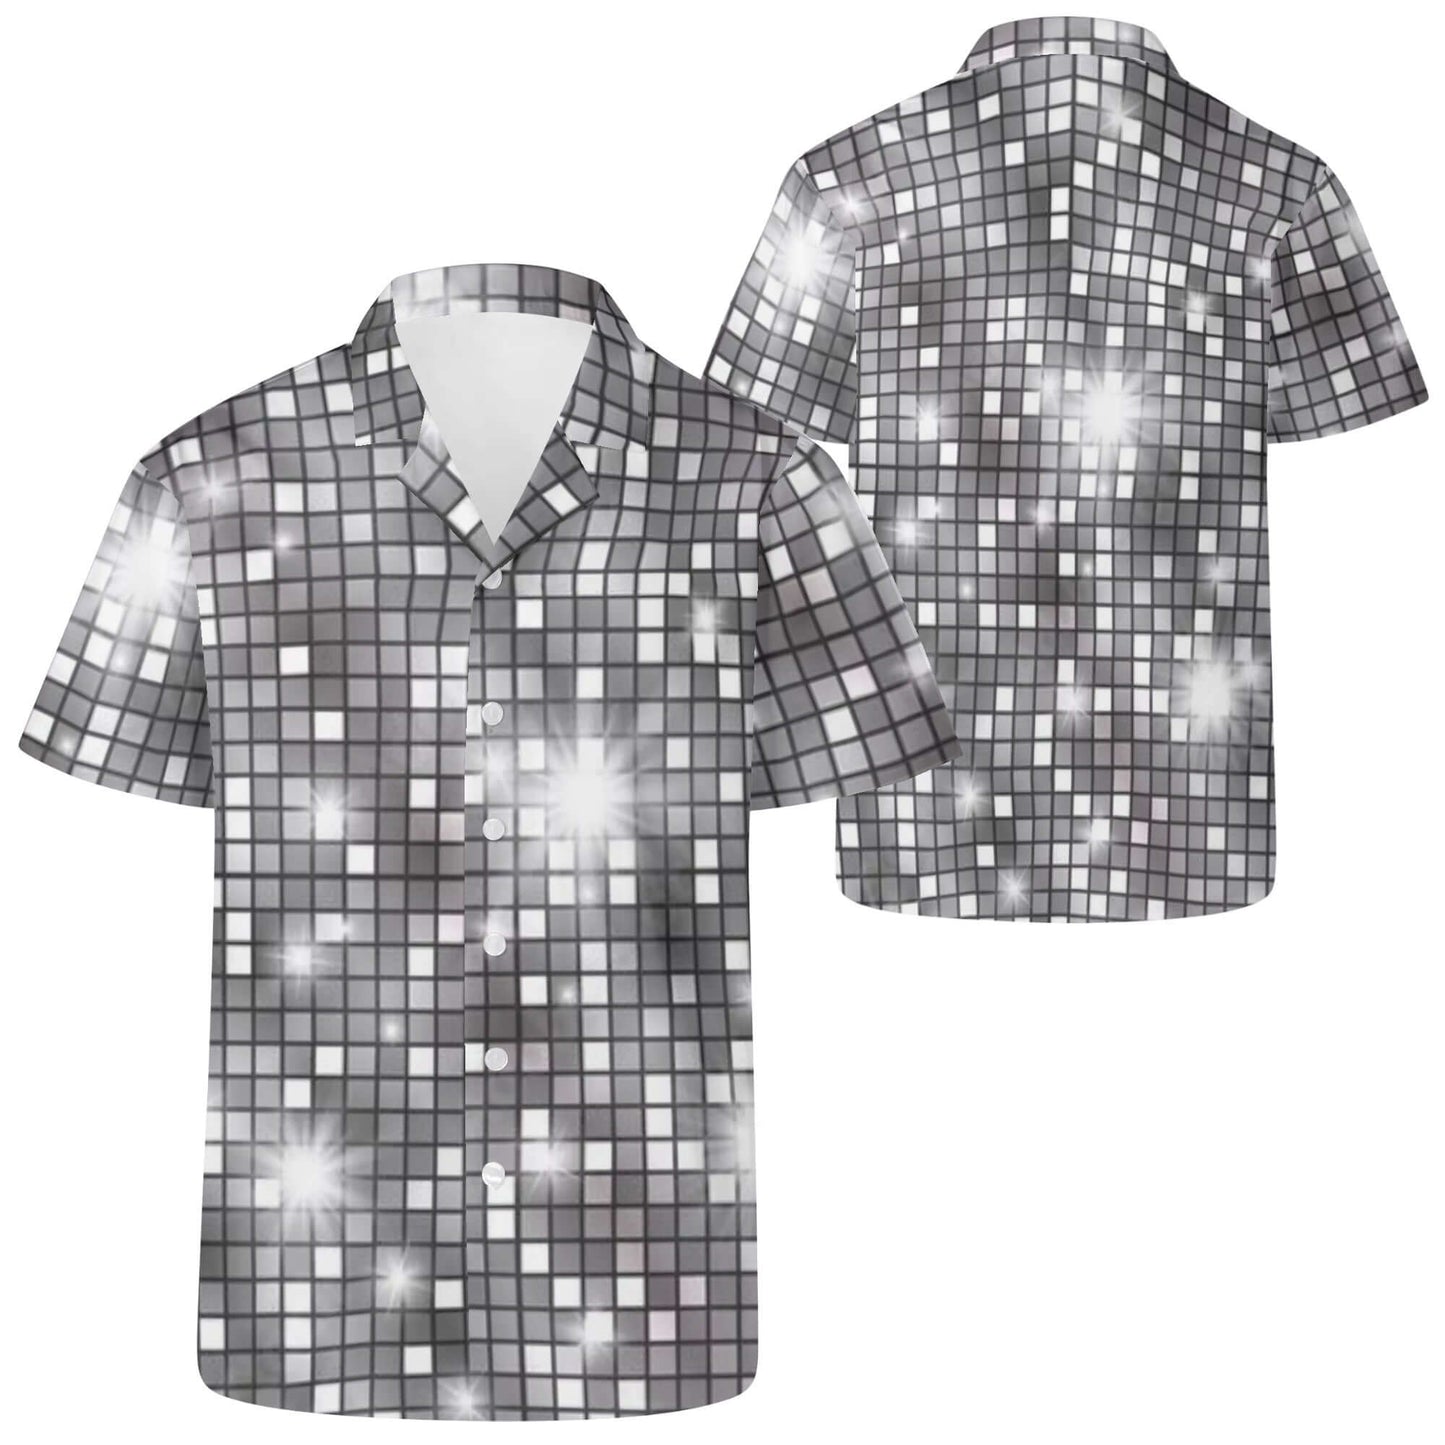 Disco Ball Hawaiian Shirt For Men